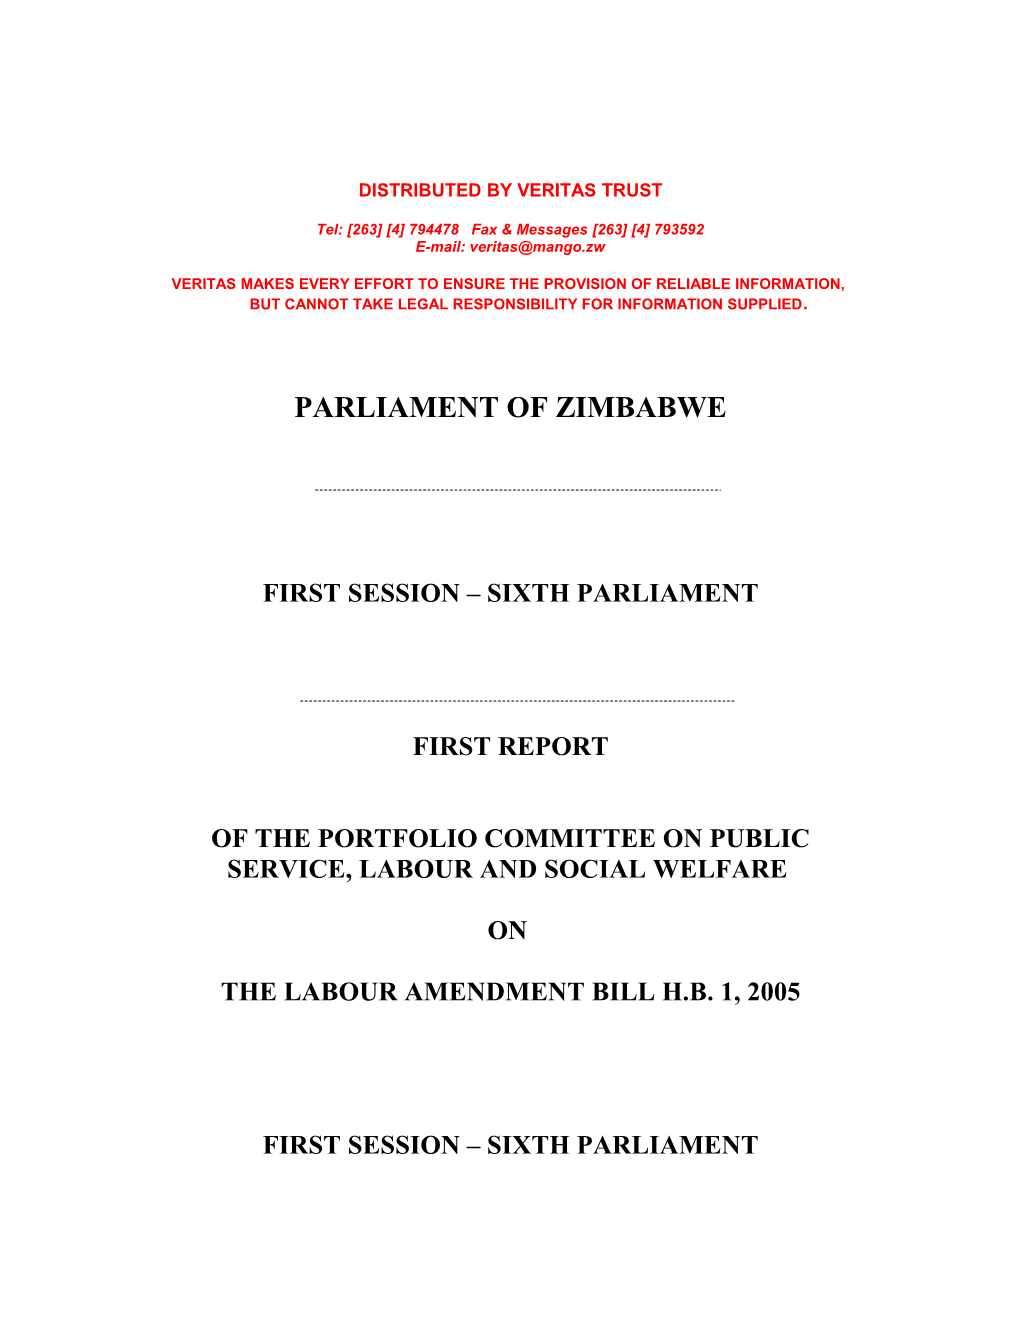 Portfolio Committee Report on Labour Amendment Bill